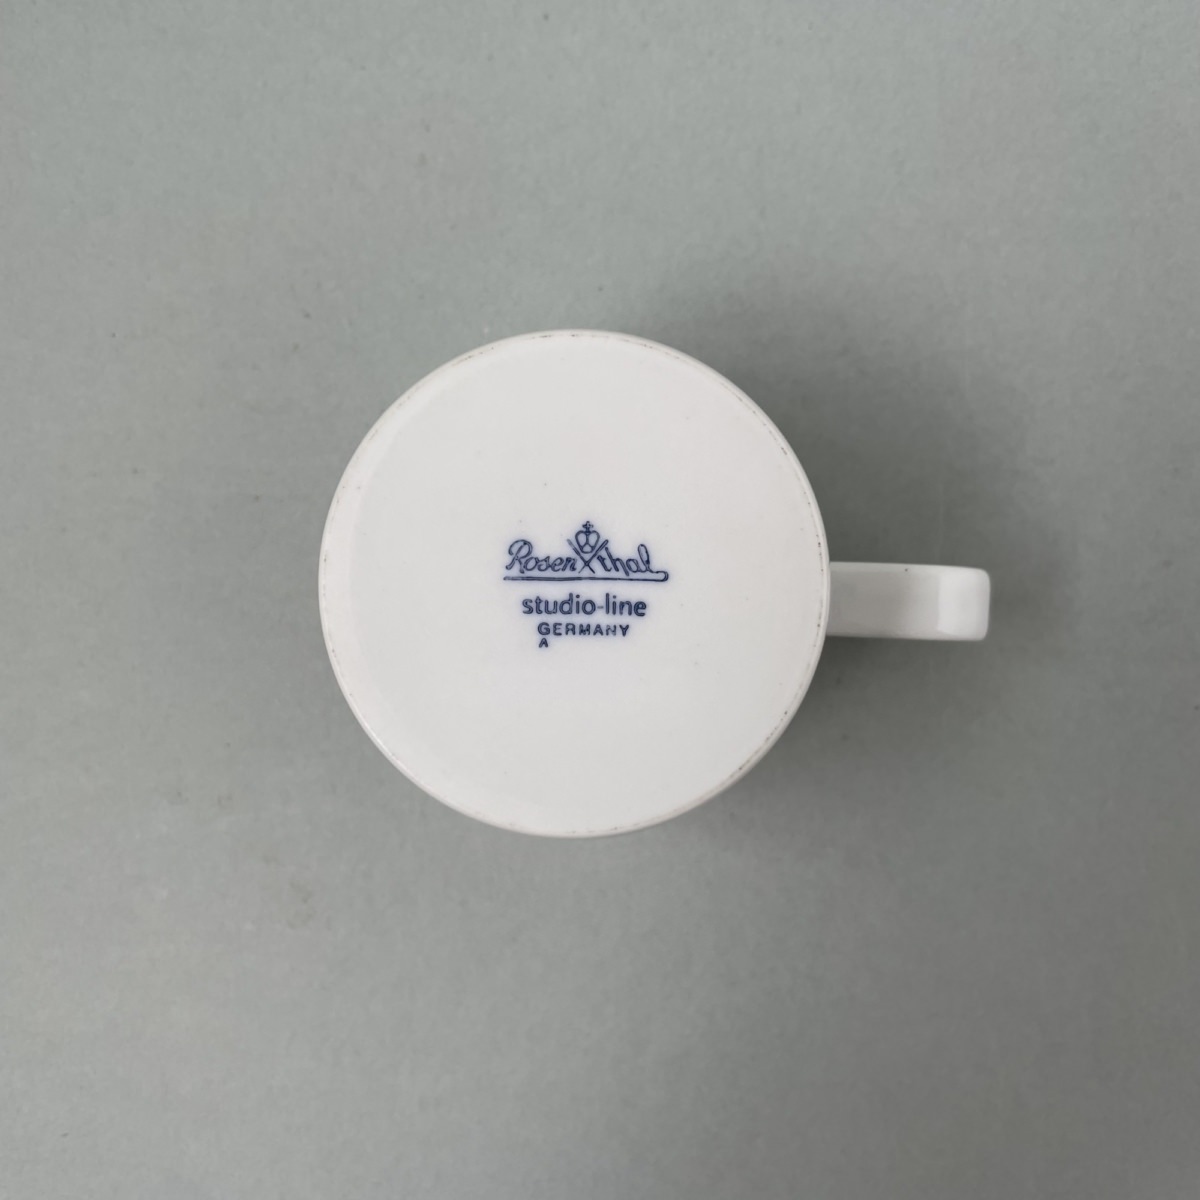 OthersRosenthal studio-line Demitasse cup & saucer